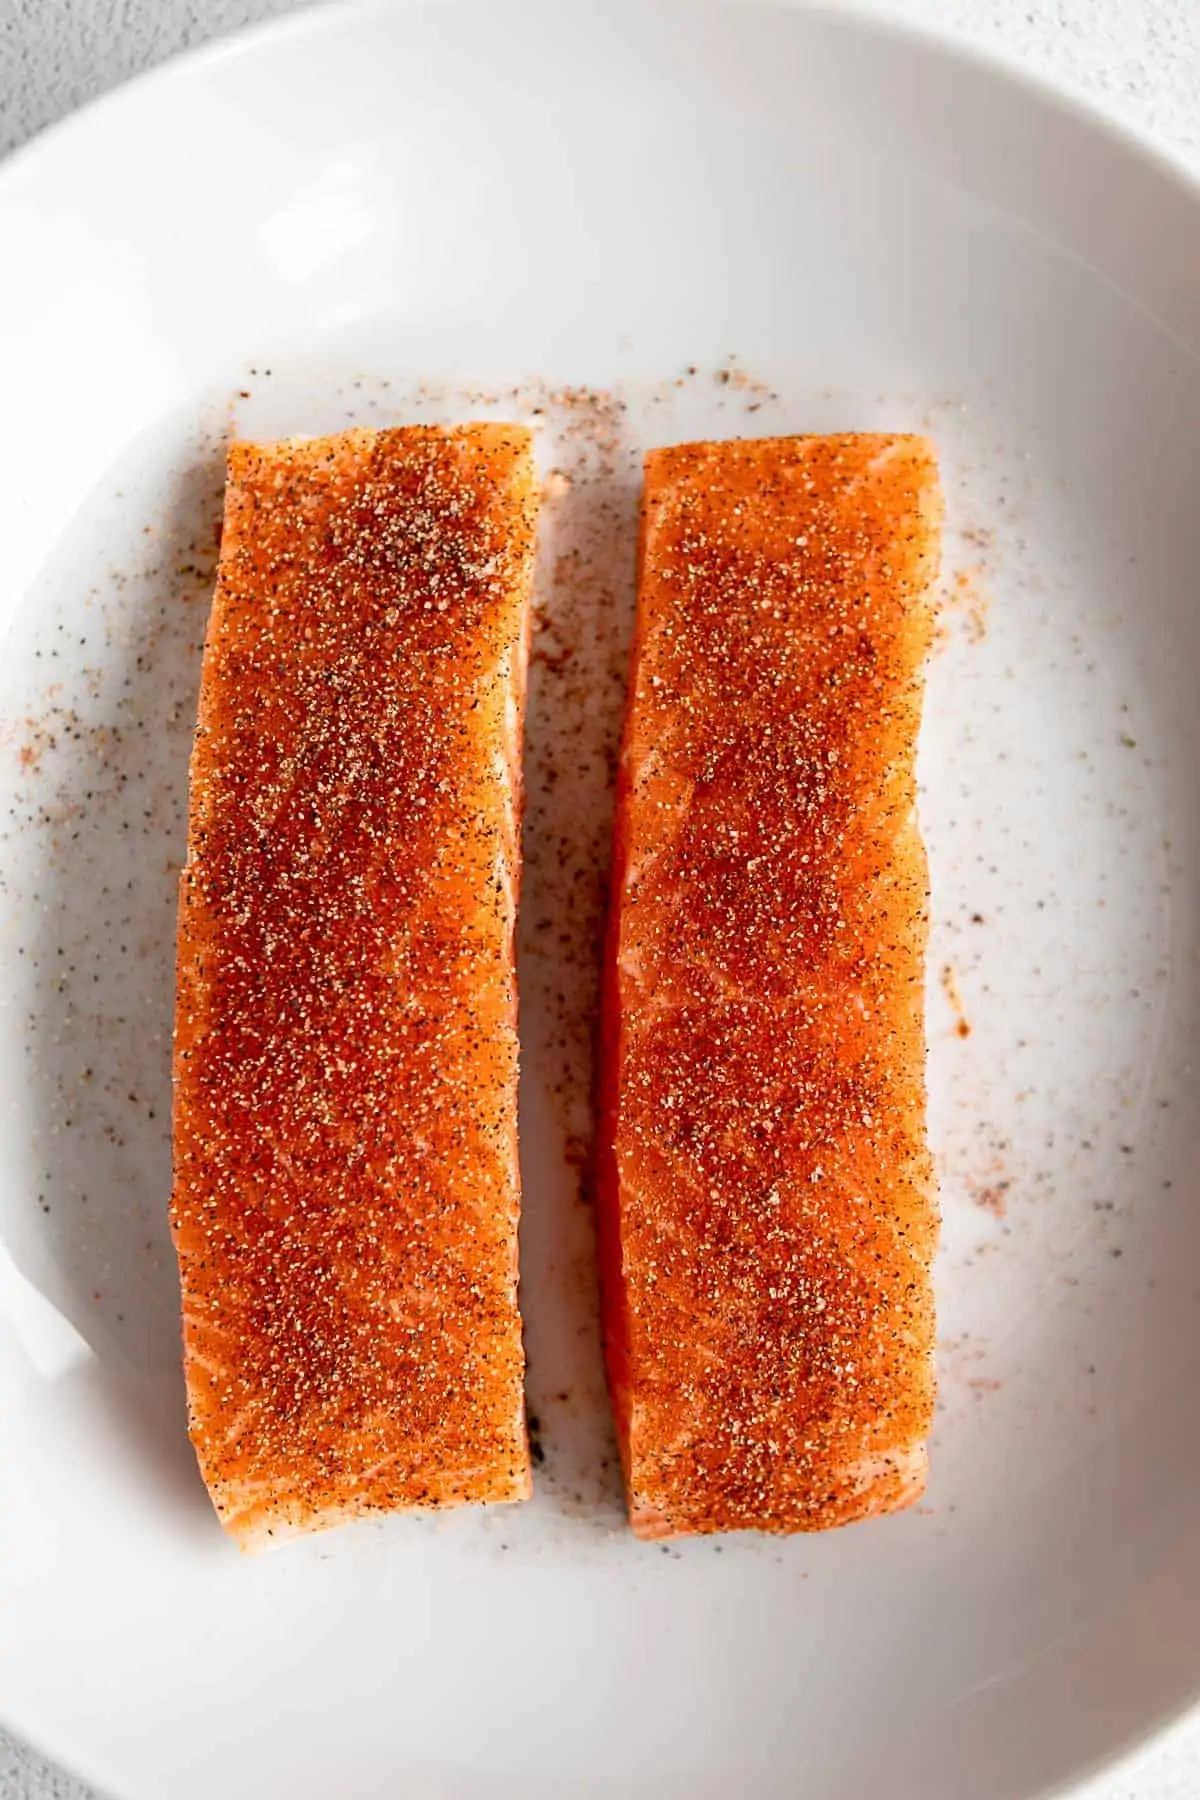 seasonings on the salmon